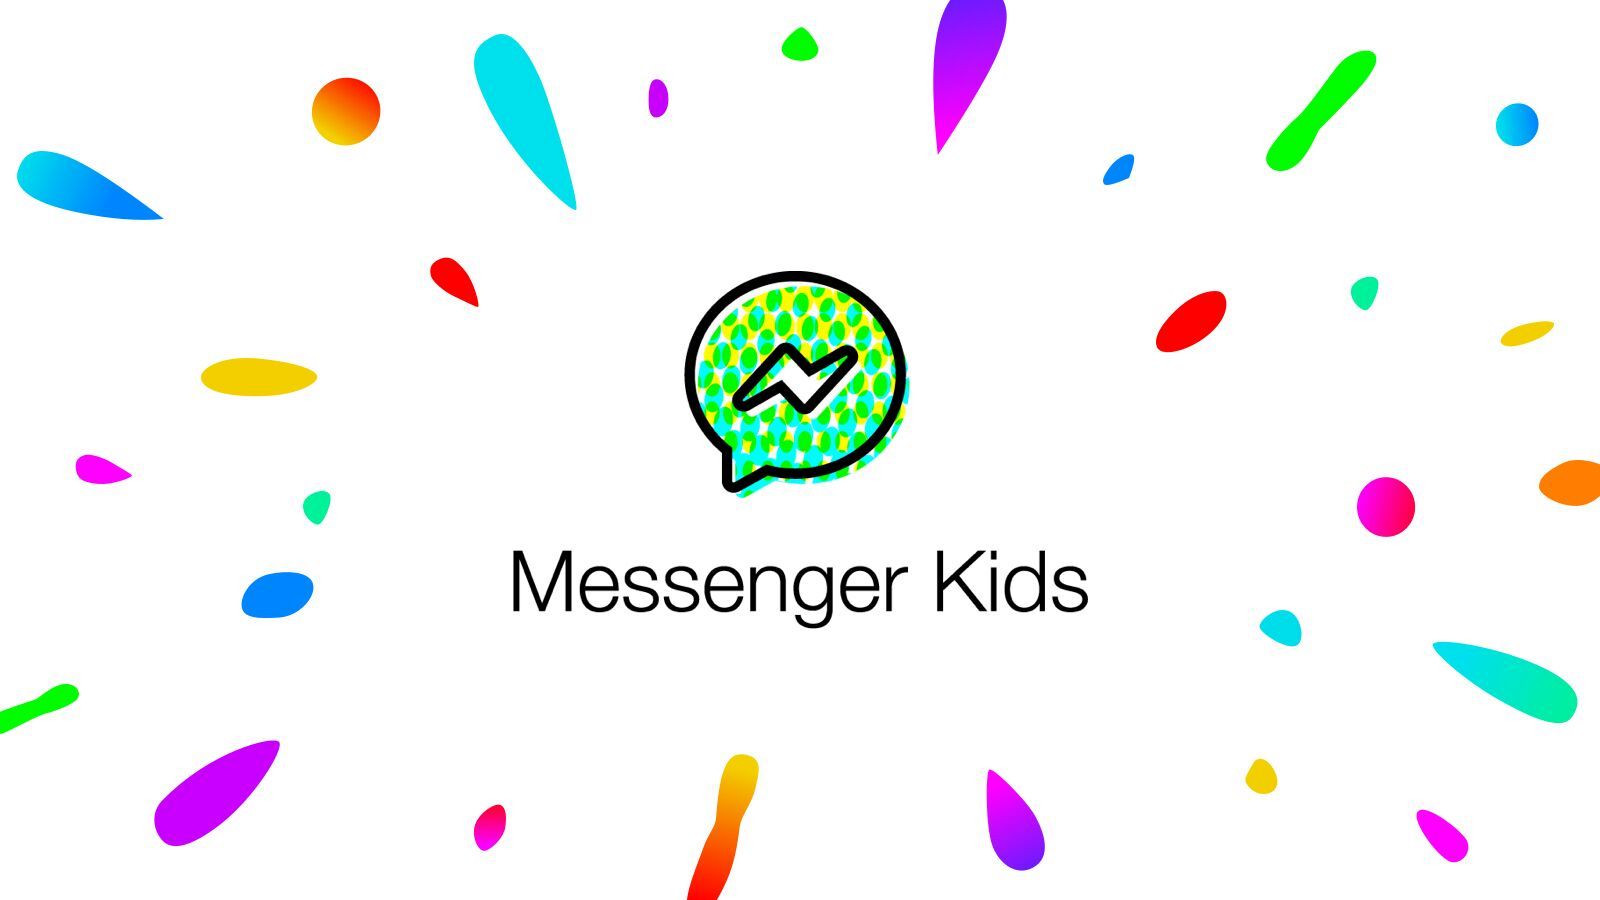 Introducing Facebook’s Messenger Kids in Maldives